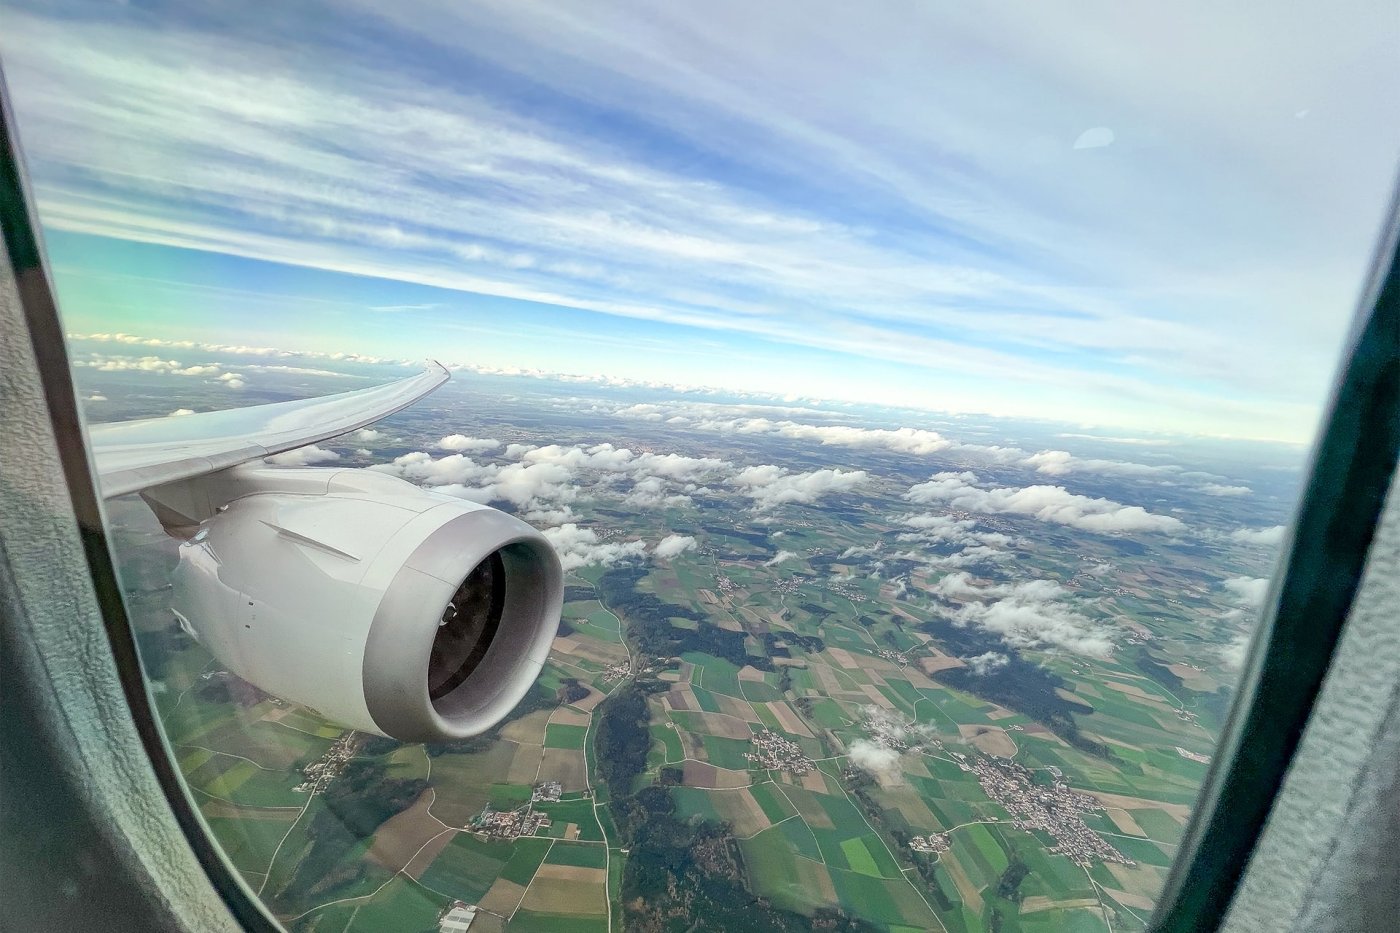 Flight review: Lufthansa from Frankfurt to Munich in Business